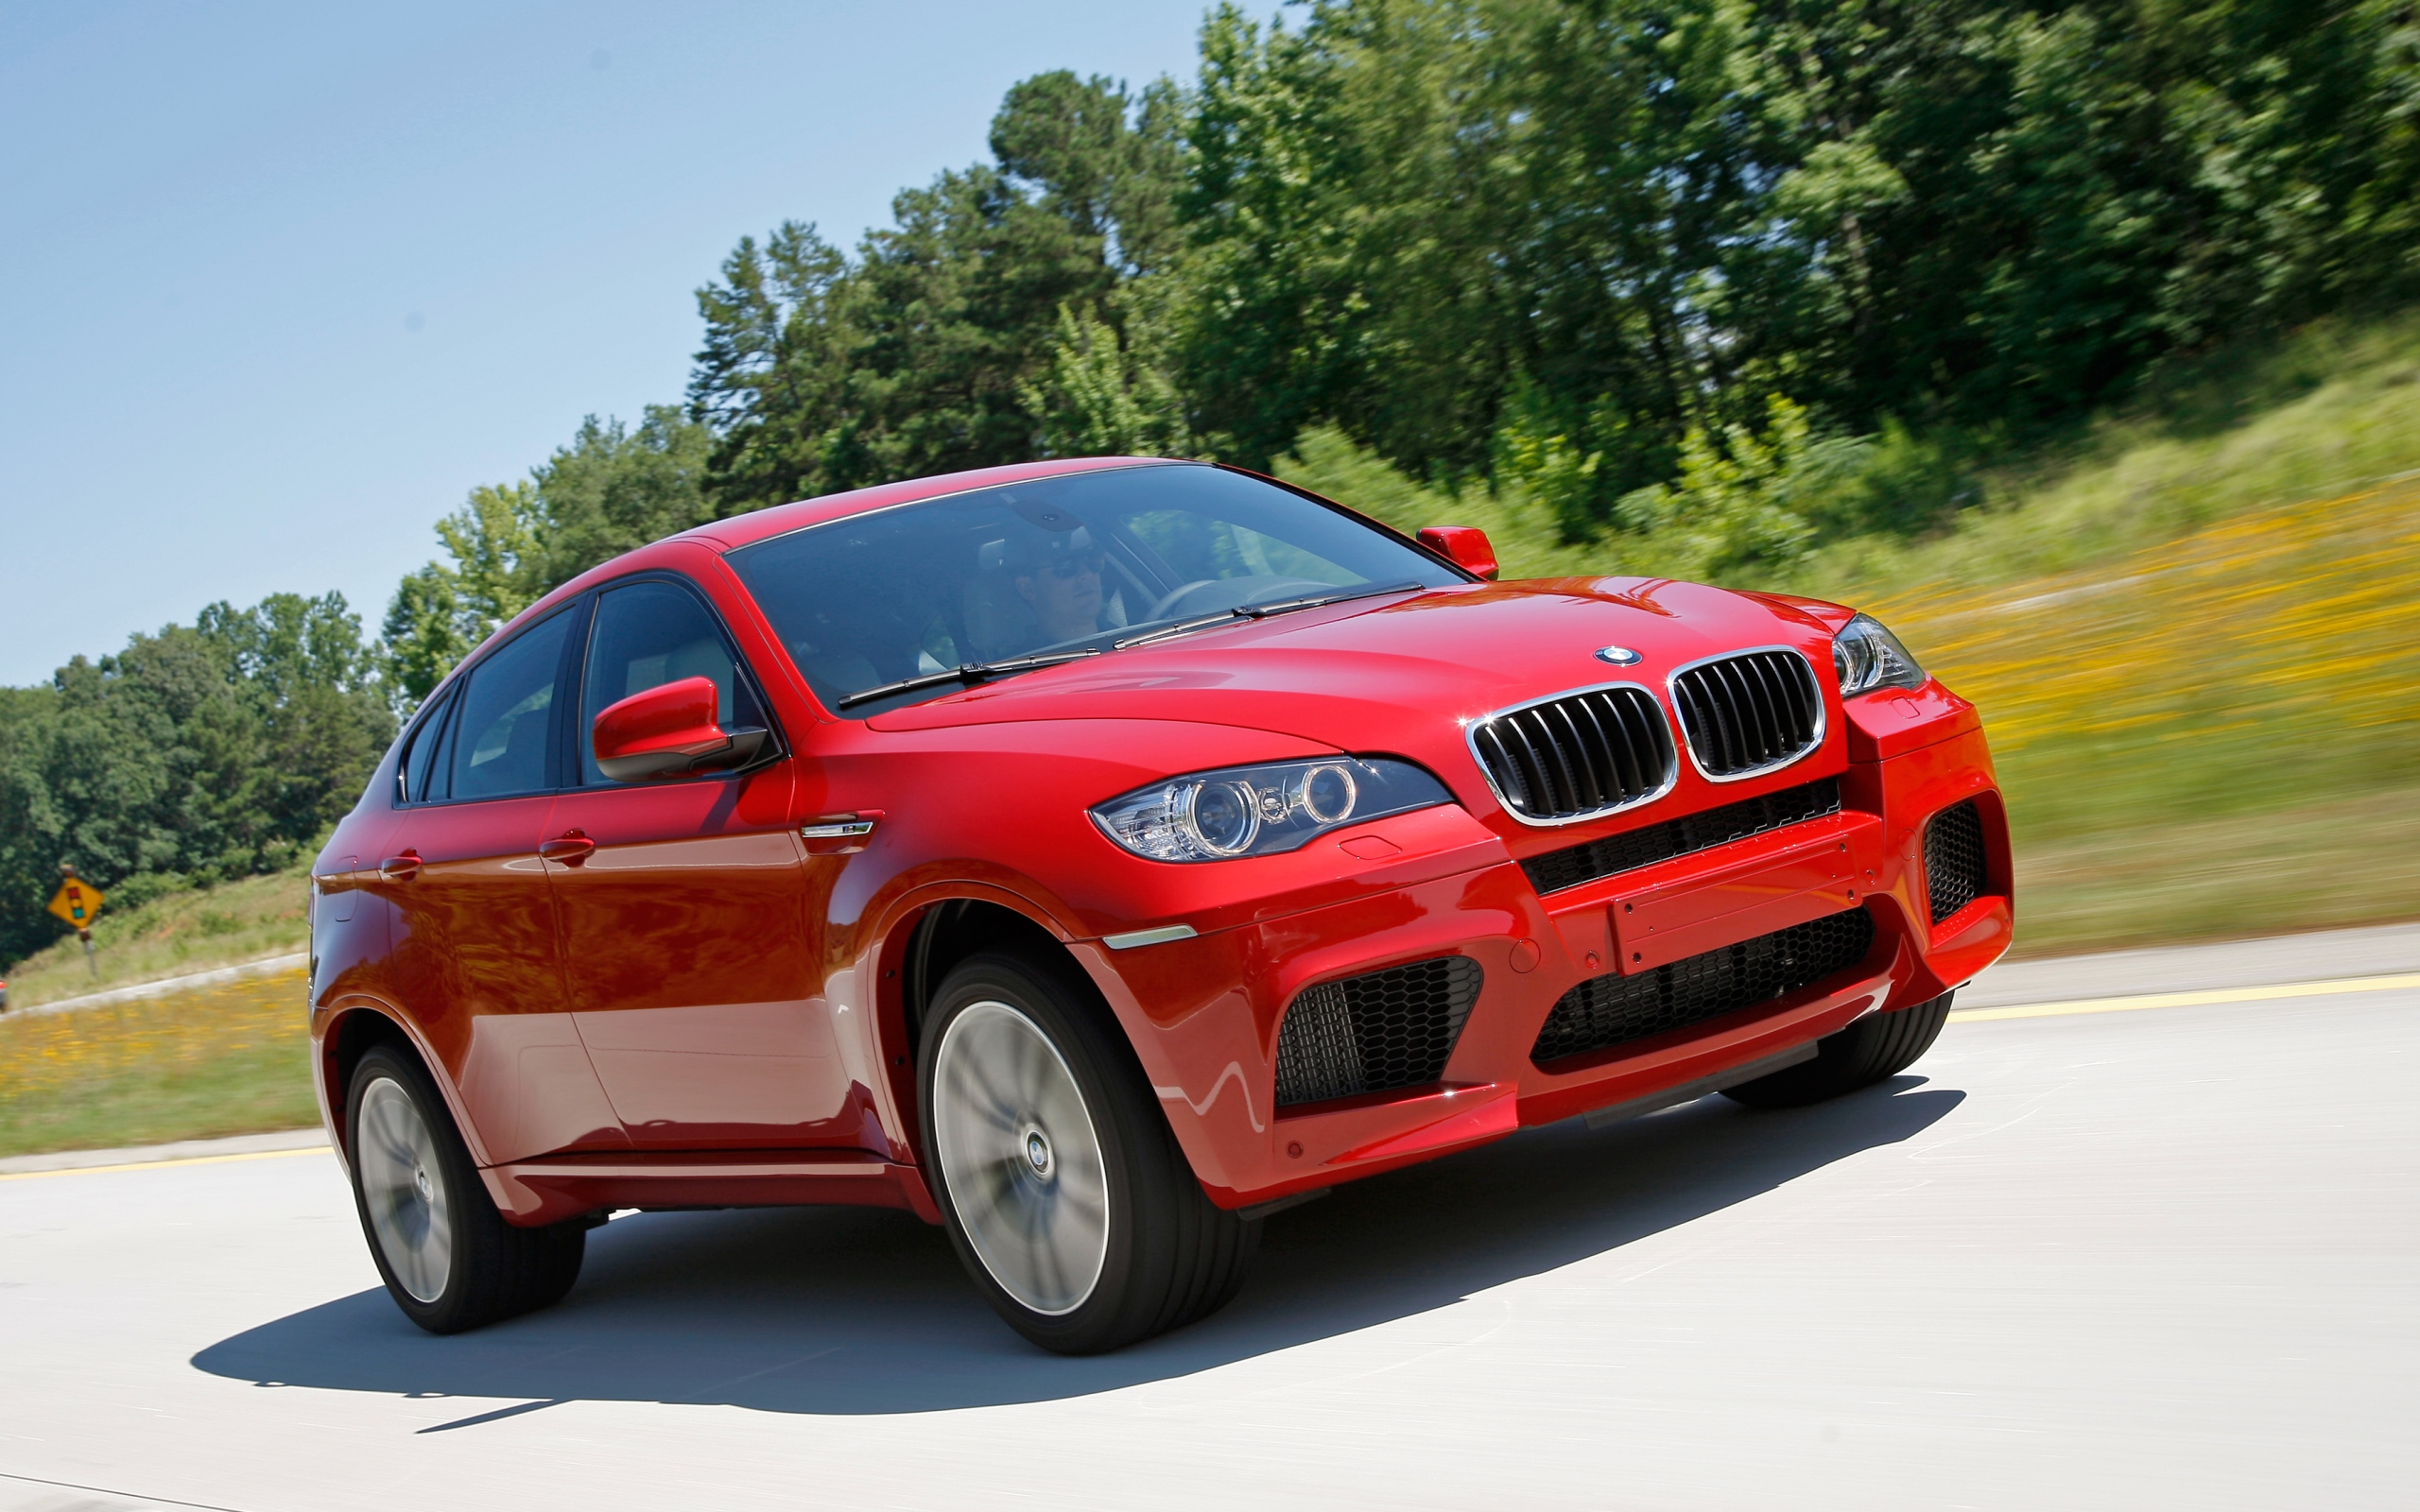 X6 цвет. BMW x6m Red. BMW x6m красный. BMW x6m 2009. BMW x6 e71 красный.